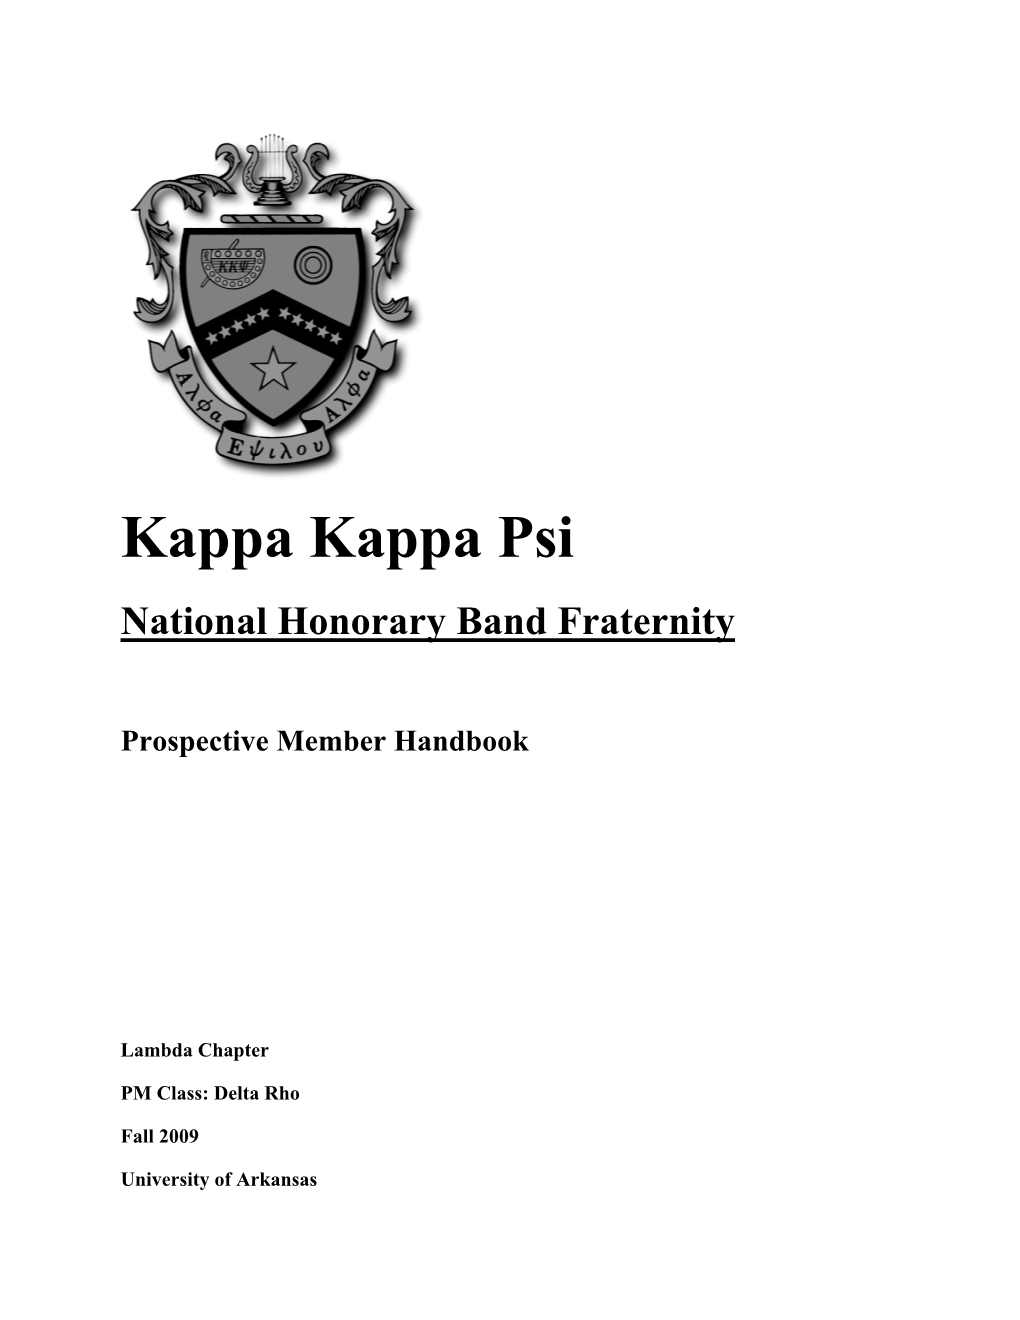 Kappa Kappa Psi National Honorary Band Fraternity Prospective